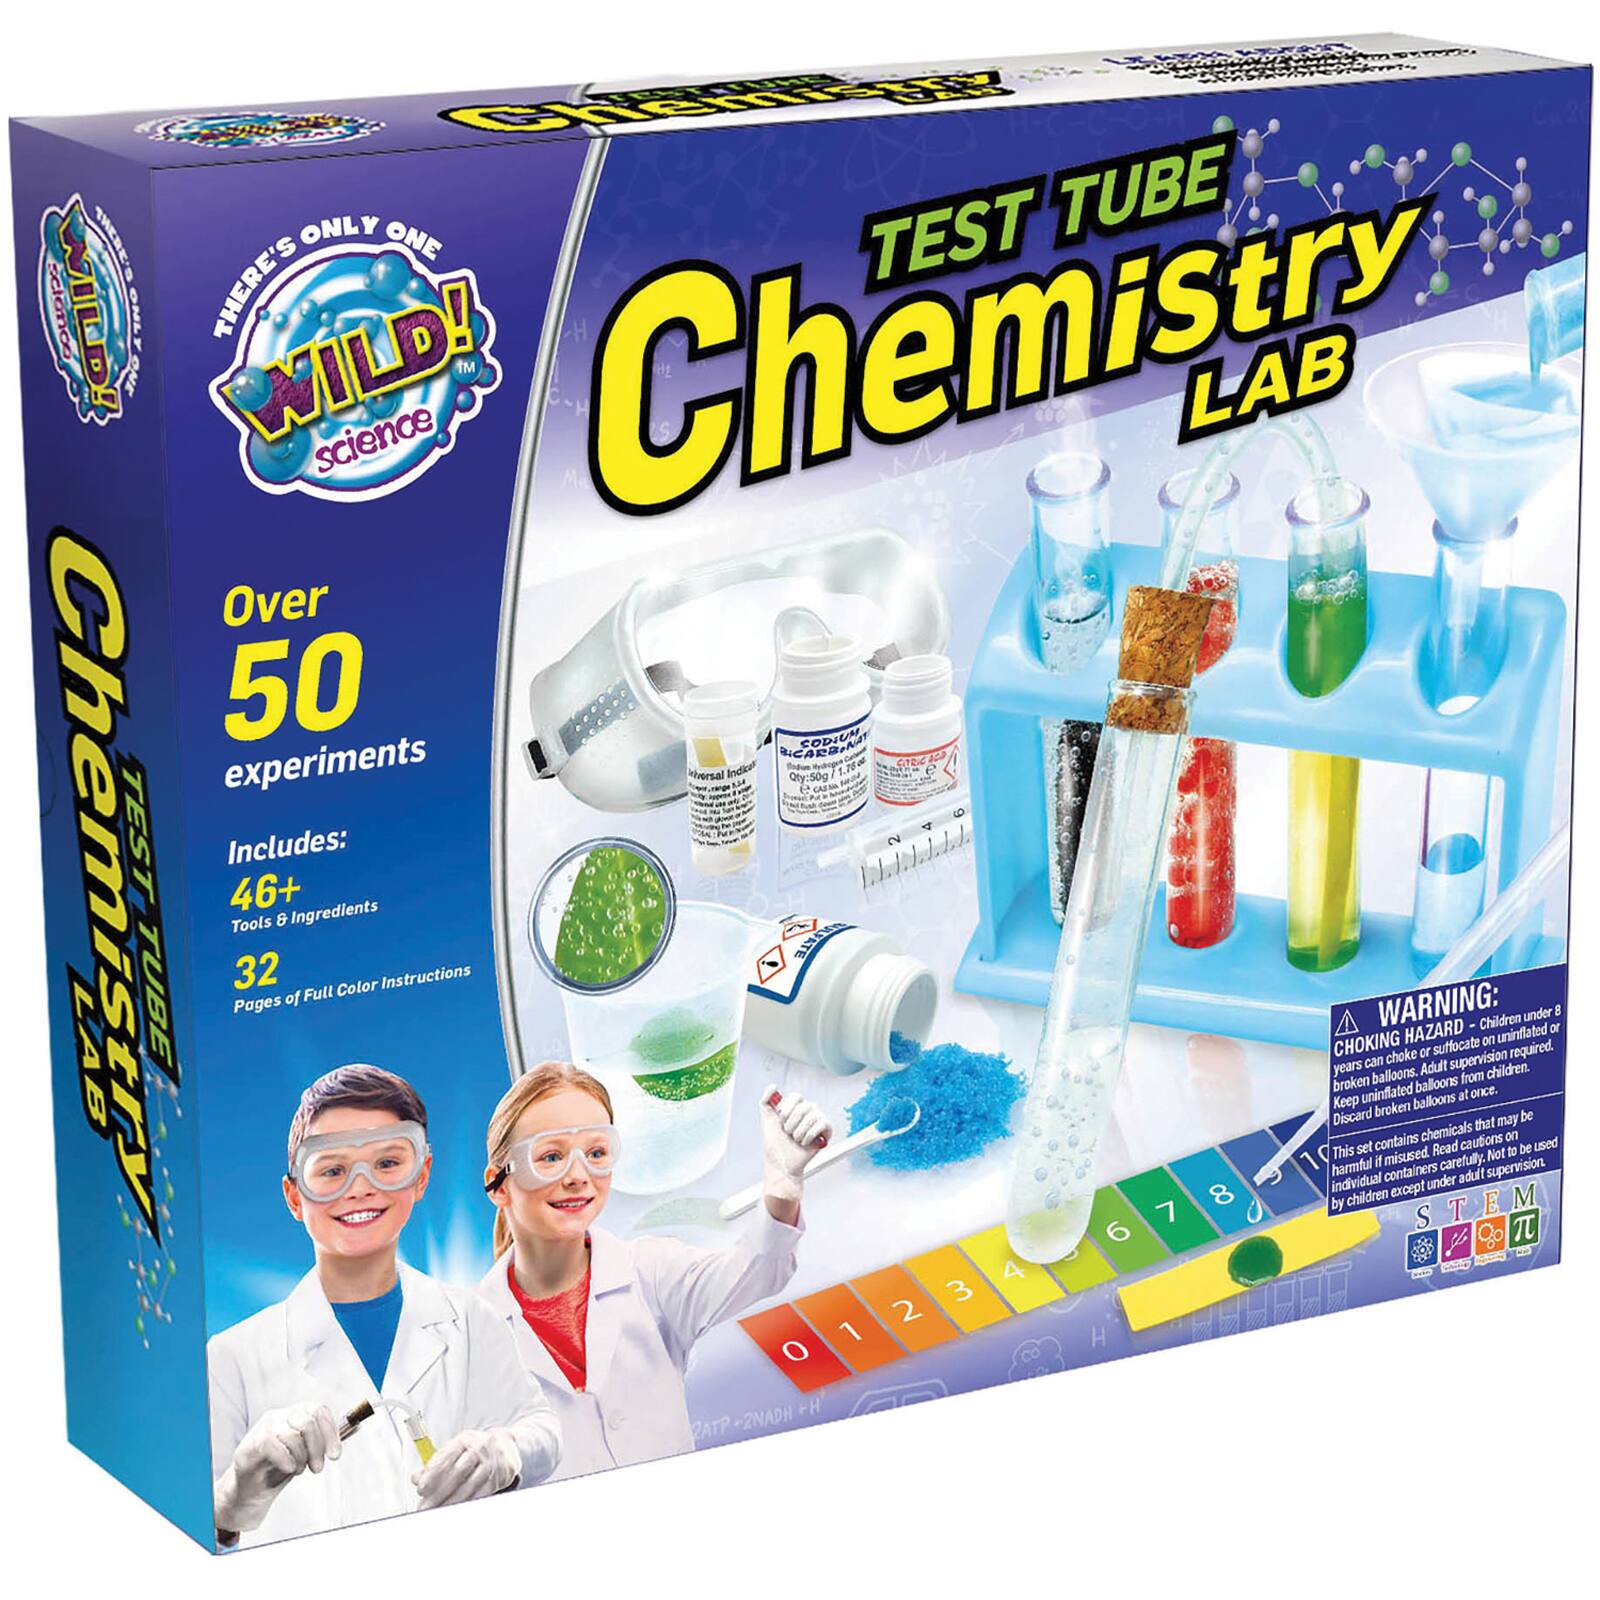 Learning Advantage&#x2122; Wild! Science&#x2122; Test Tube Chemistry Lab Kit